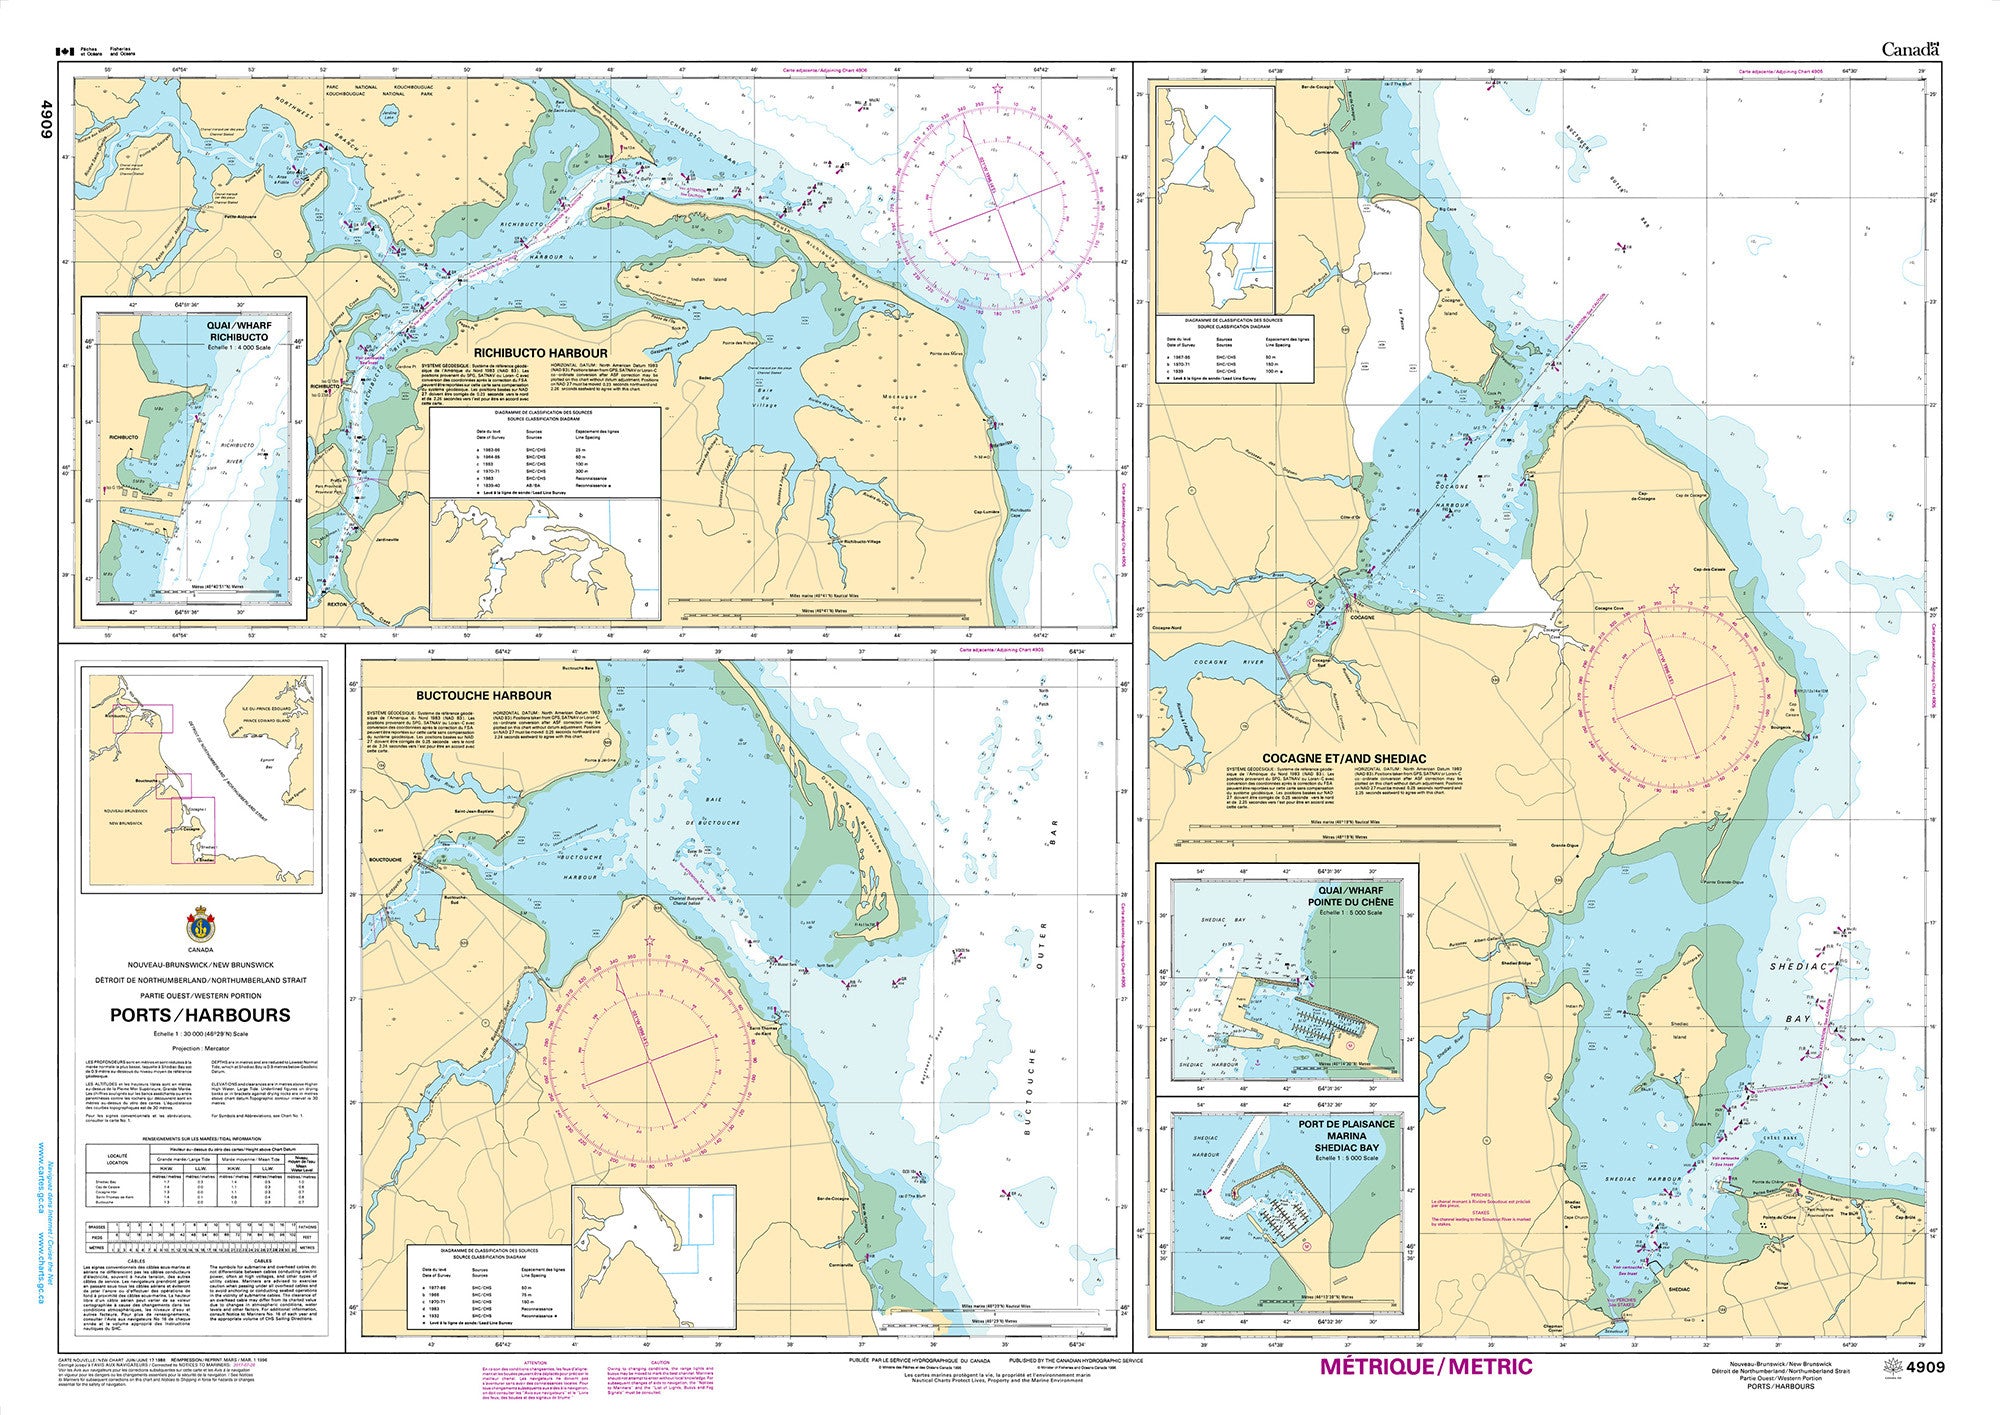 Canadian Hydrographic Service Nautical Chart CHS4909: Détroit de Northumberland/Northumberland Strait - Partie Ouest/Western Portion - Ports / Harbour...